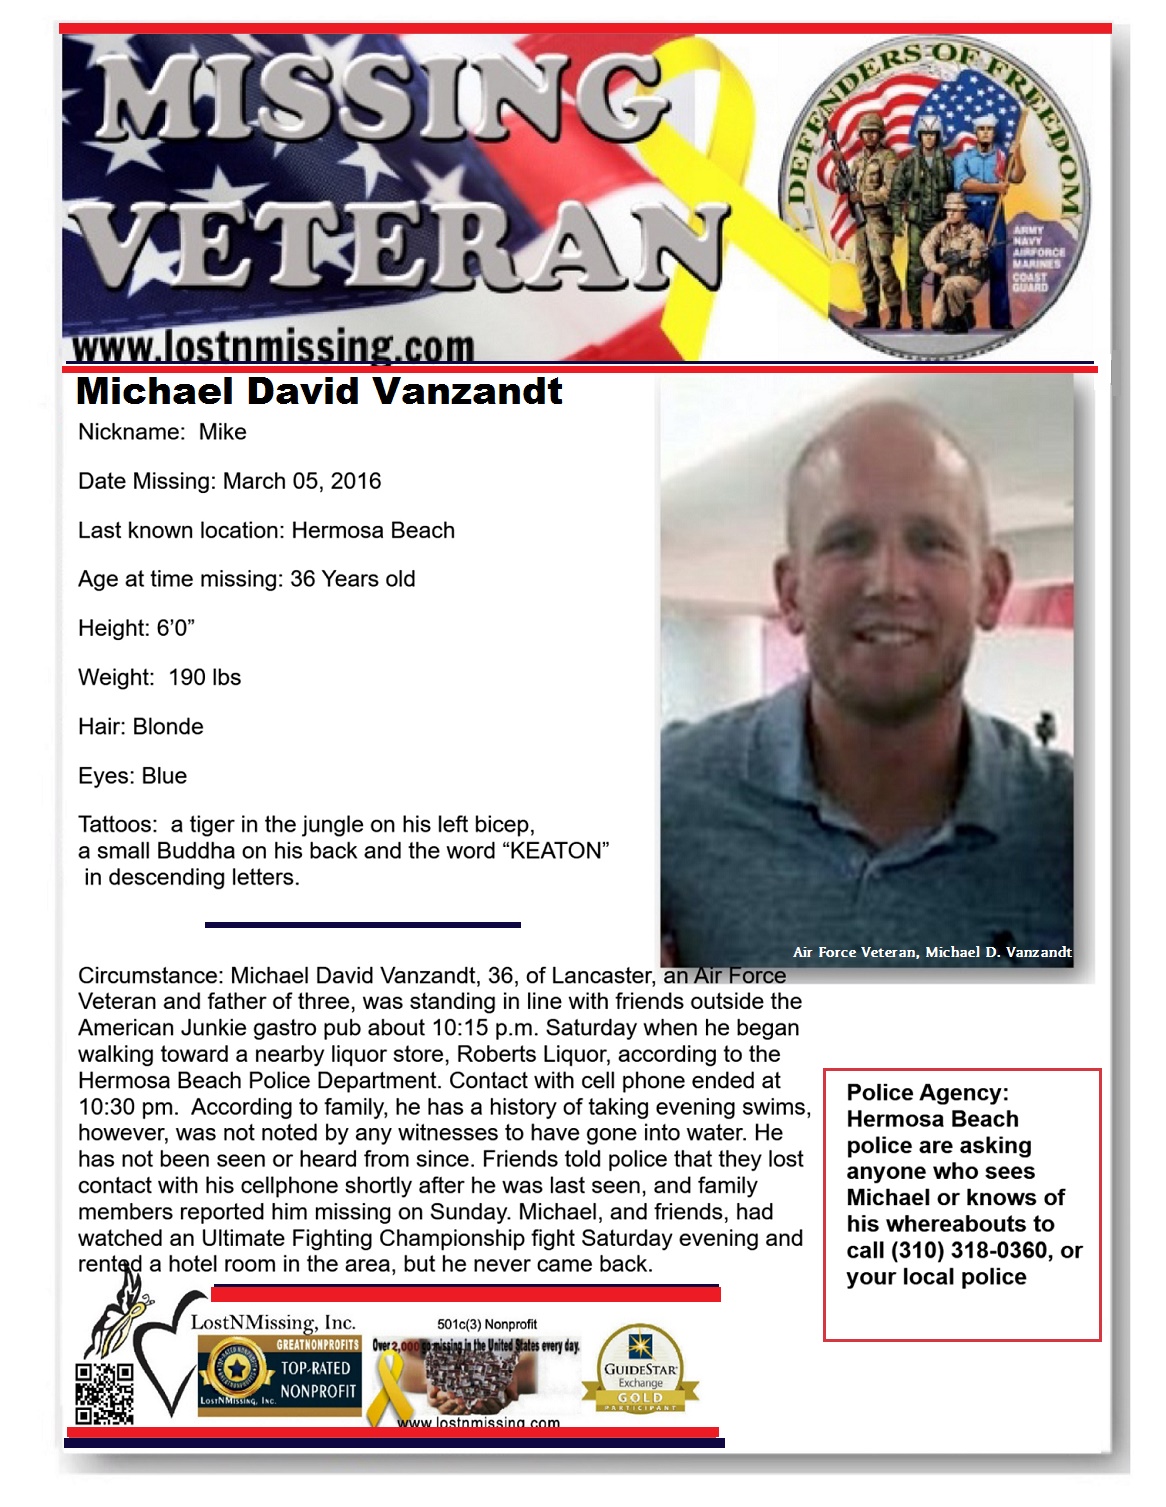 Air Force Veteran Michael Vanzandt,36 MISSING Hermosa Beach, CA since March 5, 2016